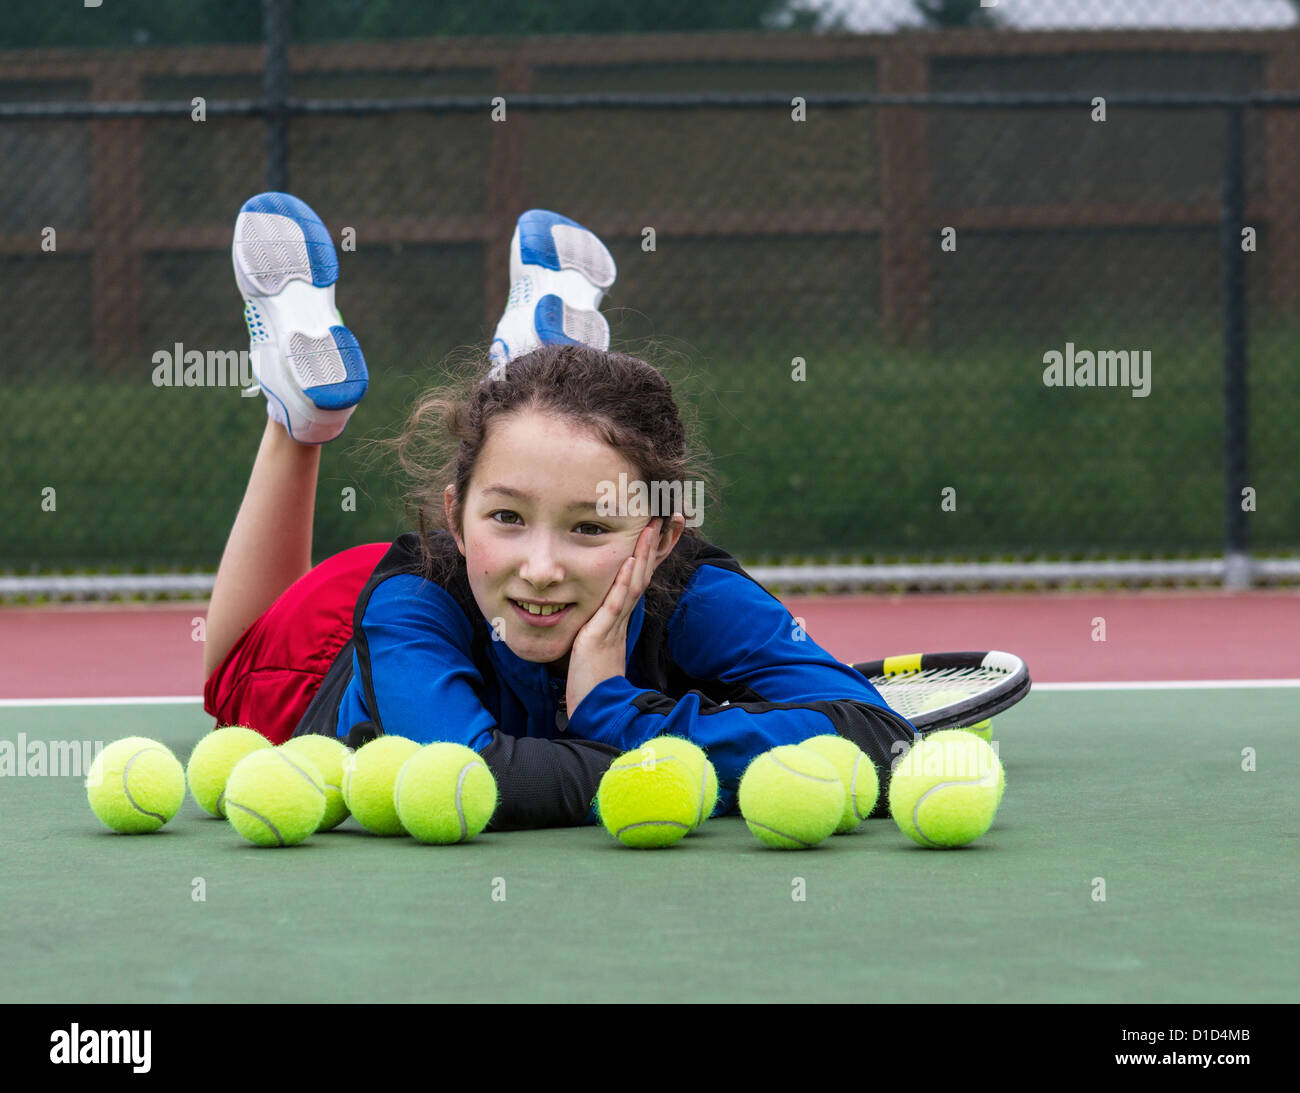 Young girl having fun on outdoor tennis court Stock Photo